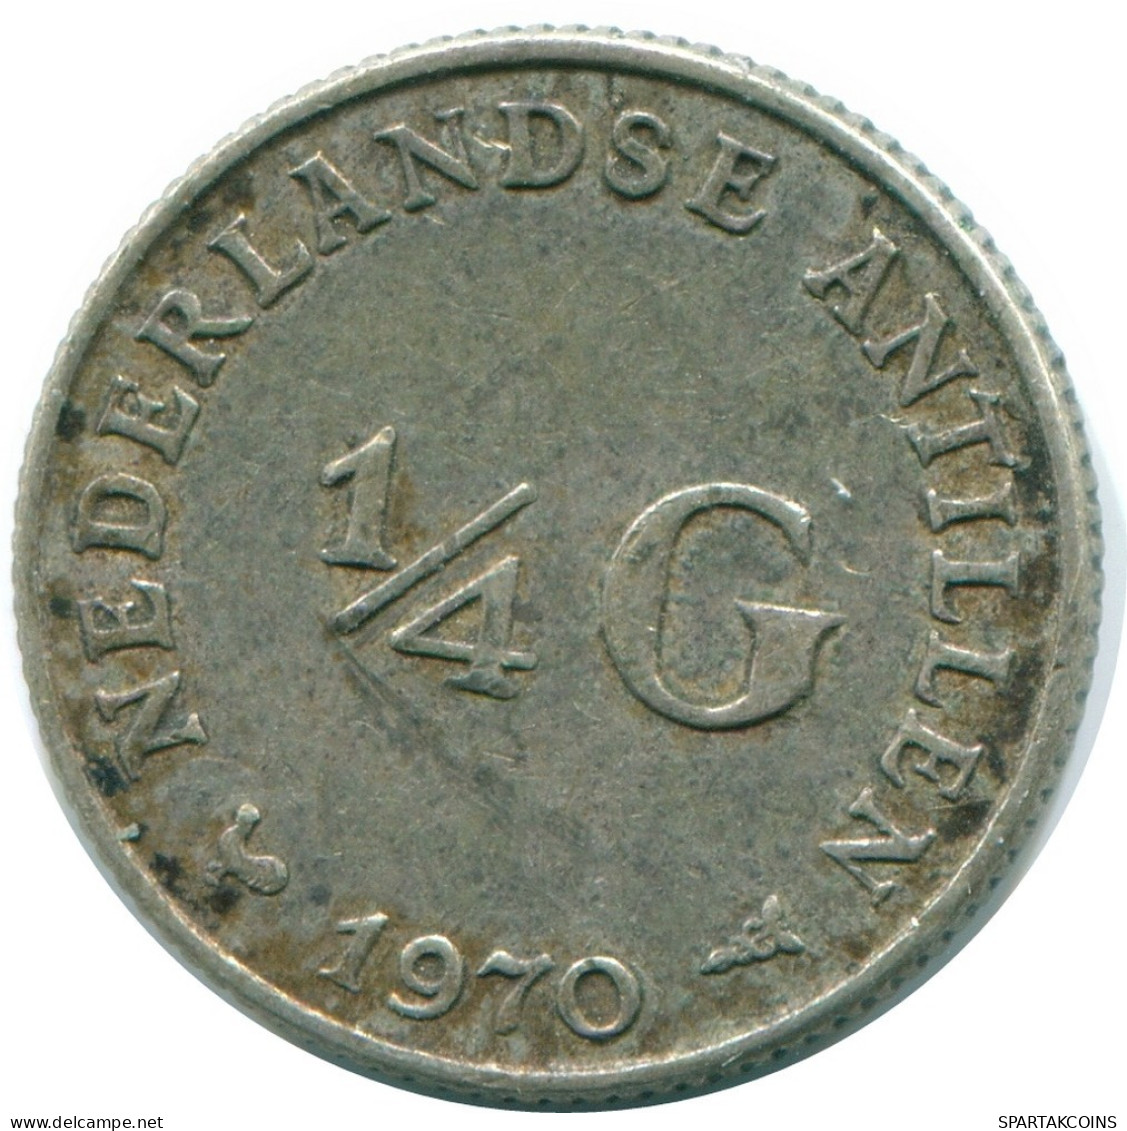 1/4 GULDEN 1970 NETHERLANDS ANTILLES SILVER Colonial Coin #NL11712.4.U.A - Antille Olandesi